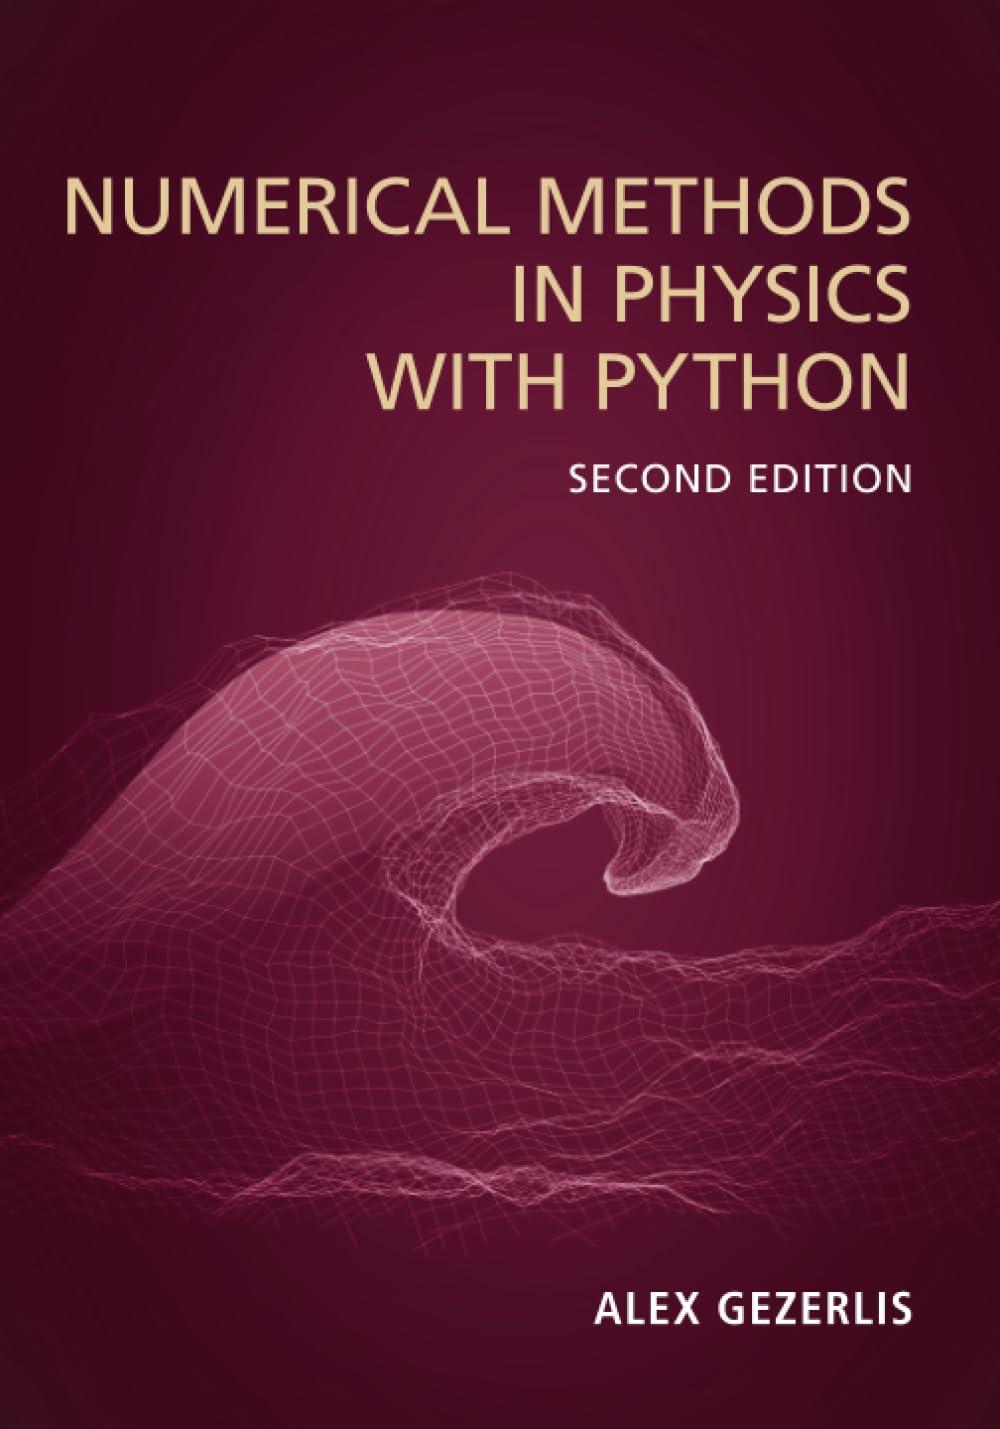 numerical methods in physics with python 2nd edition alex gezerlis 1009303864, 978-1009303866